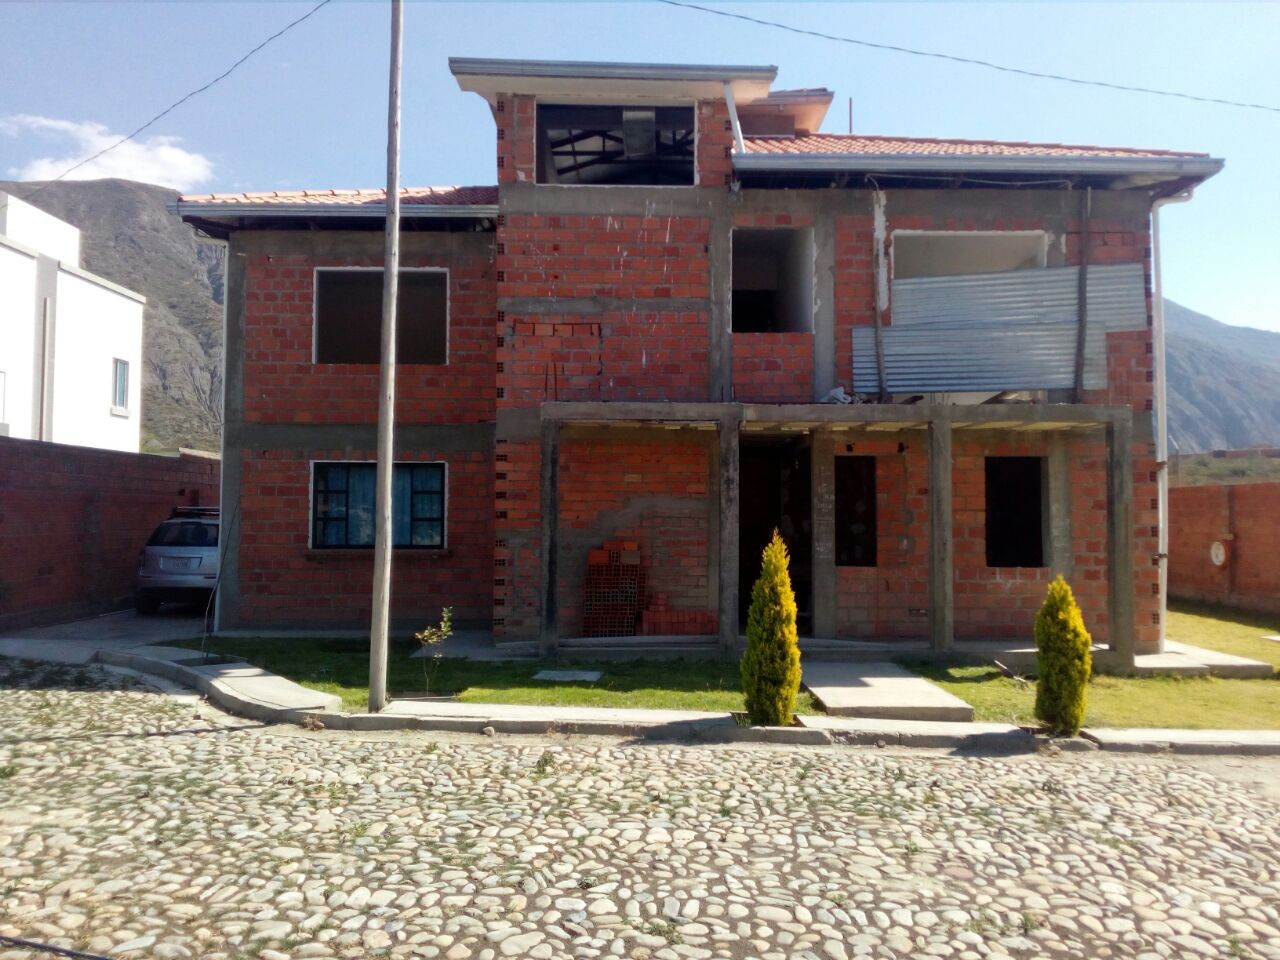 Casa en VentaTaipichullo a 700 mts de Huajchilla, Rio Abajo. Condominio 